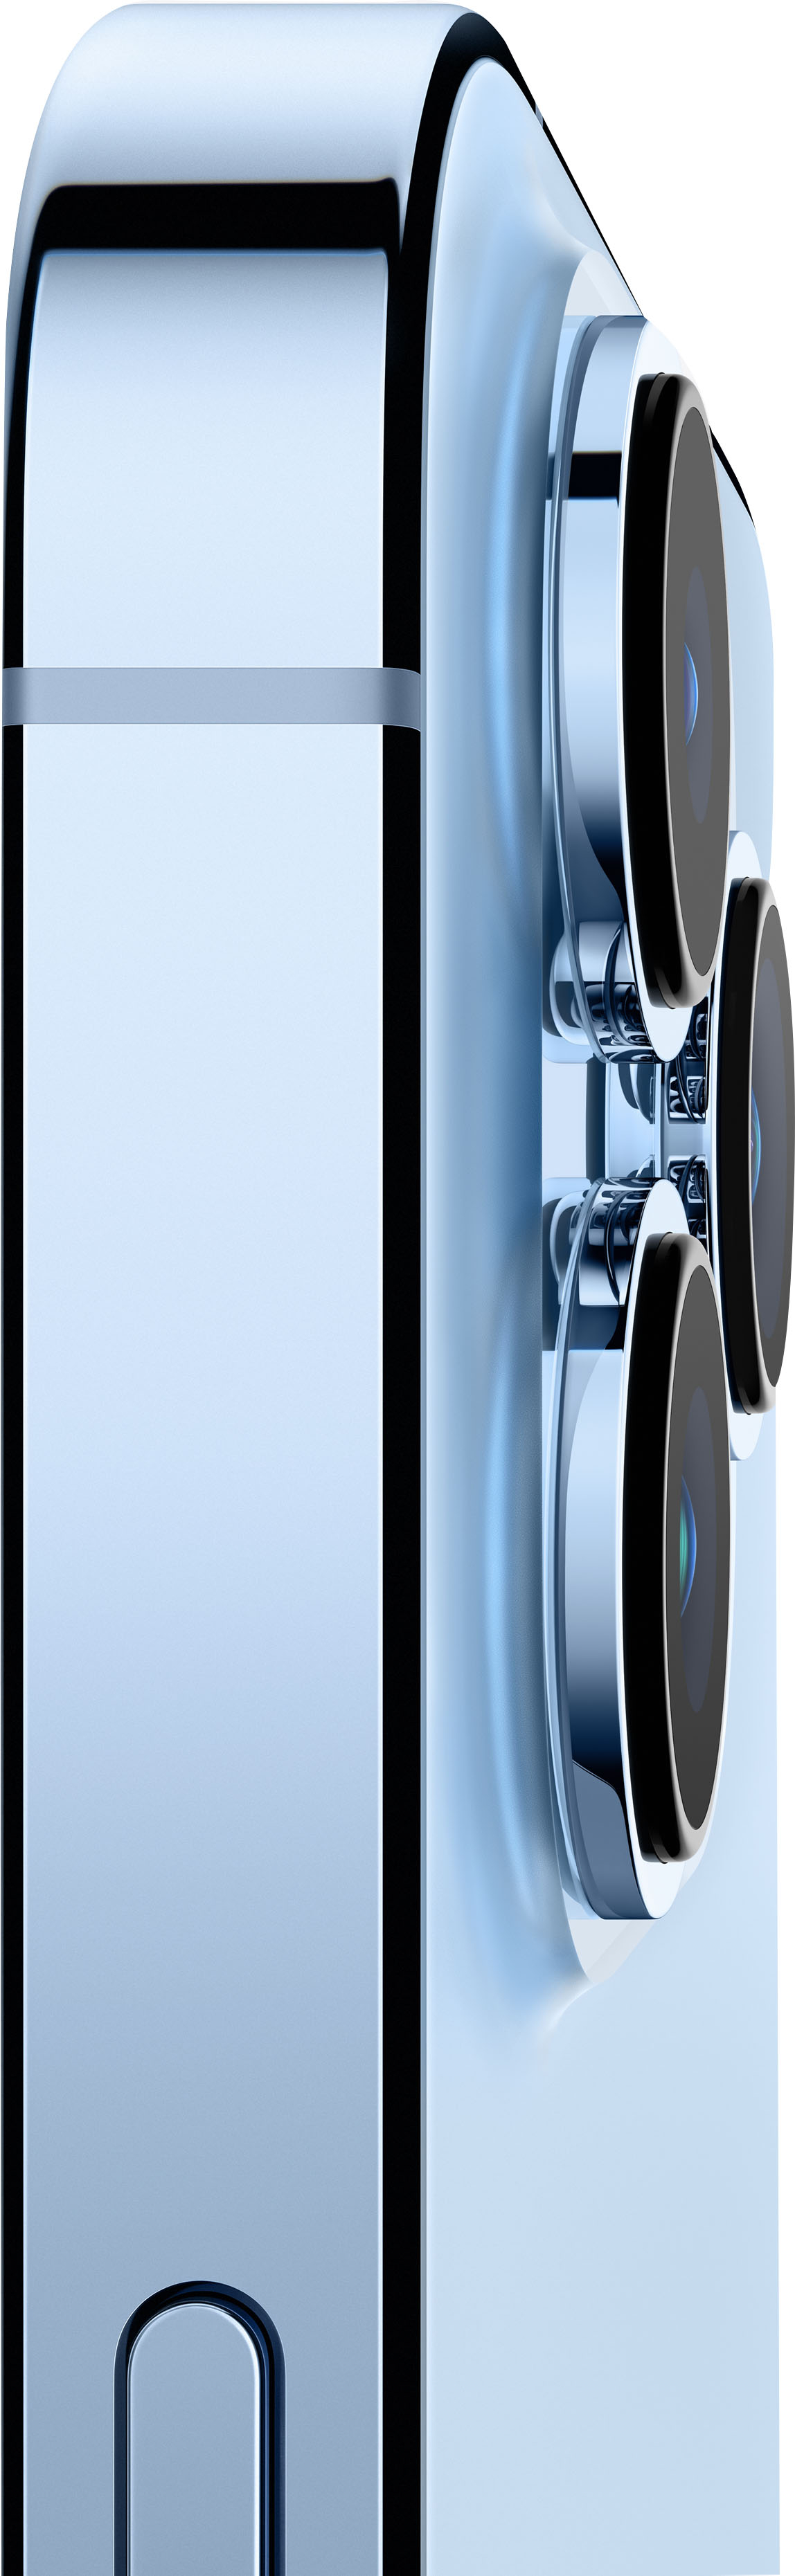 Apple iPhone 13 Pro Max 5G 128GB Sierra Blue (T-Mobile) MLKP3LL/A 